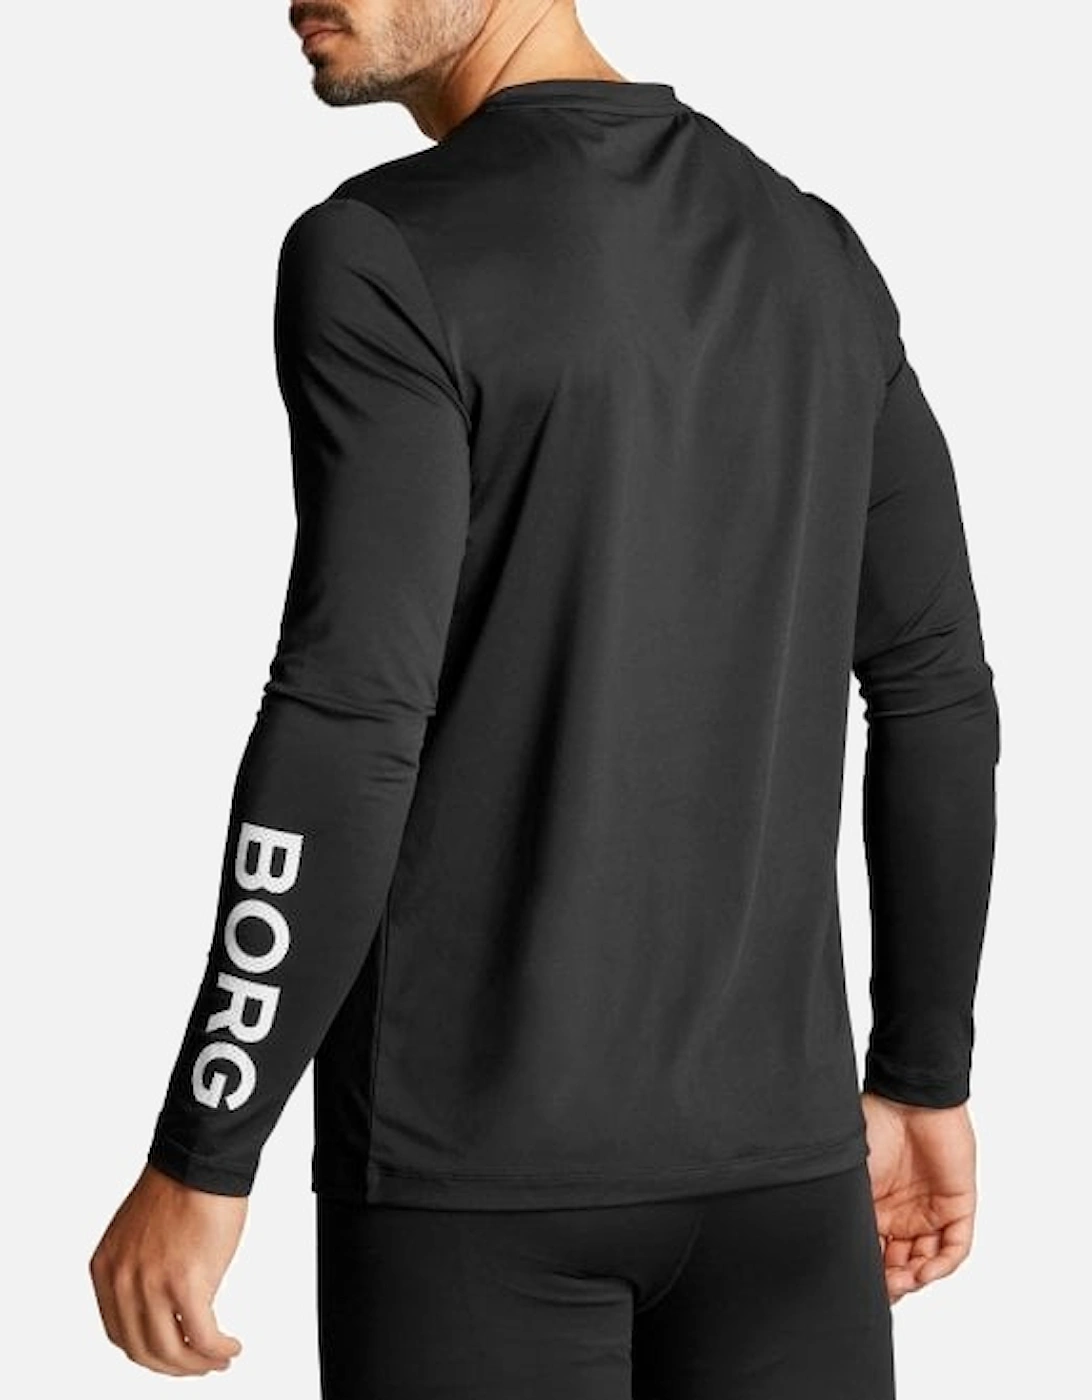 BORG Long-Sleeve Training Top, Black